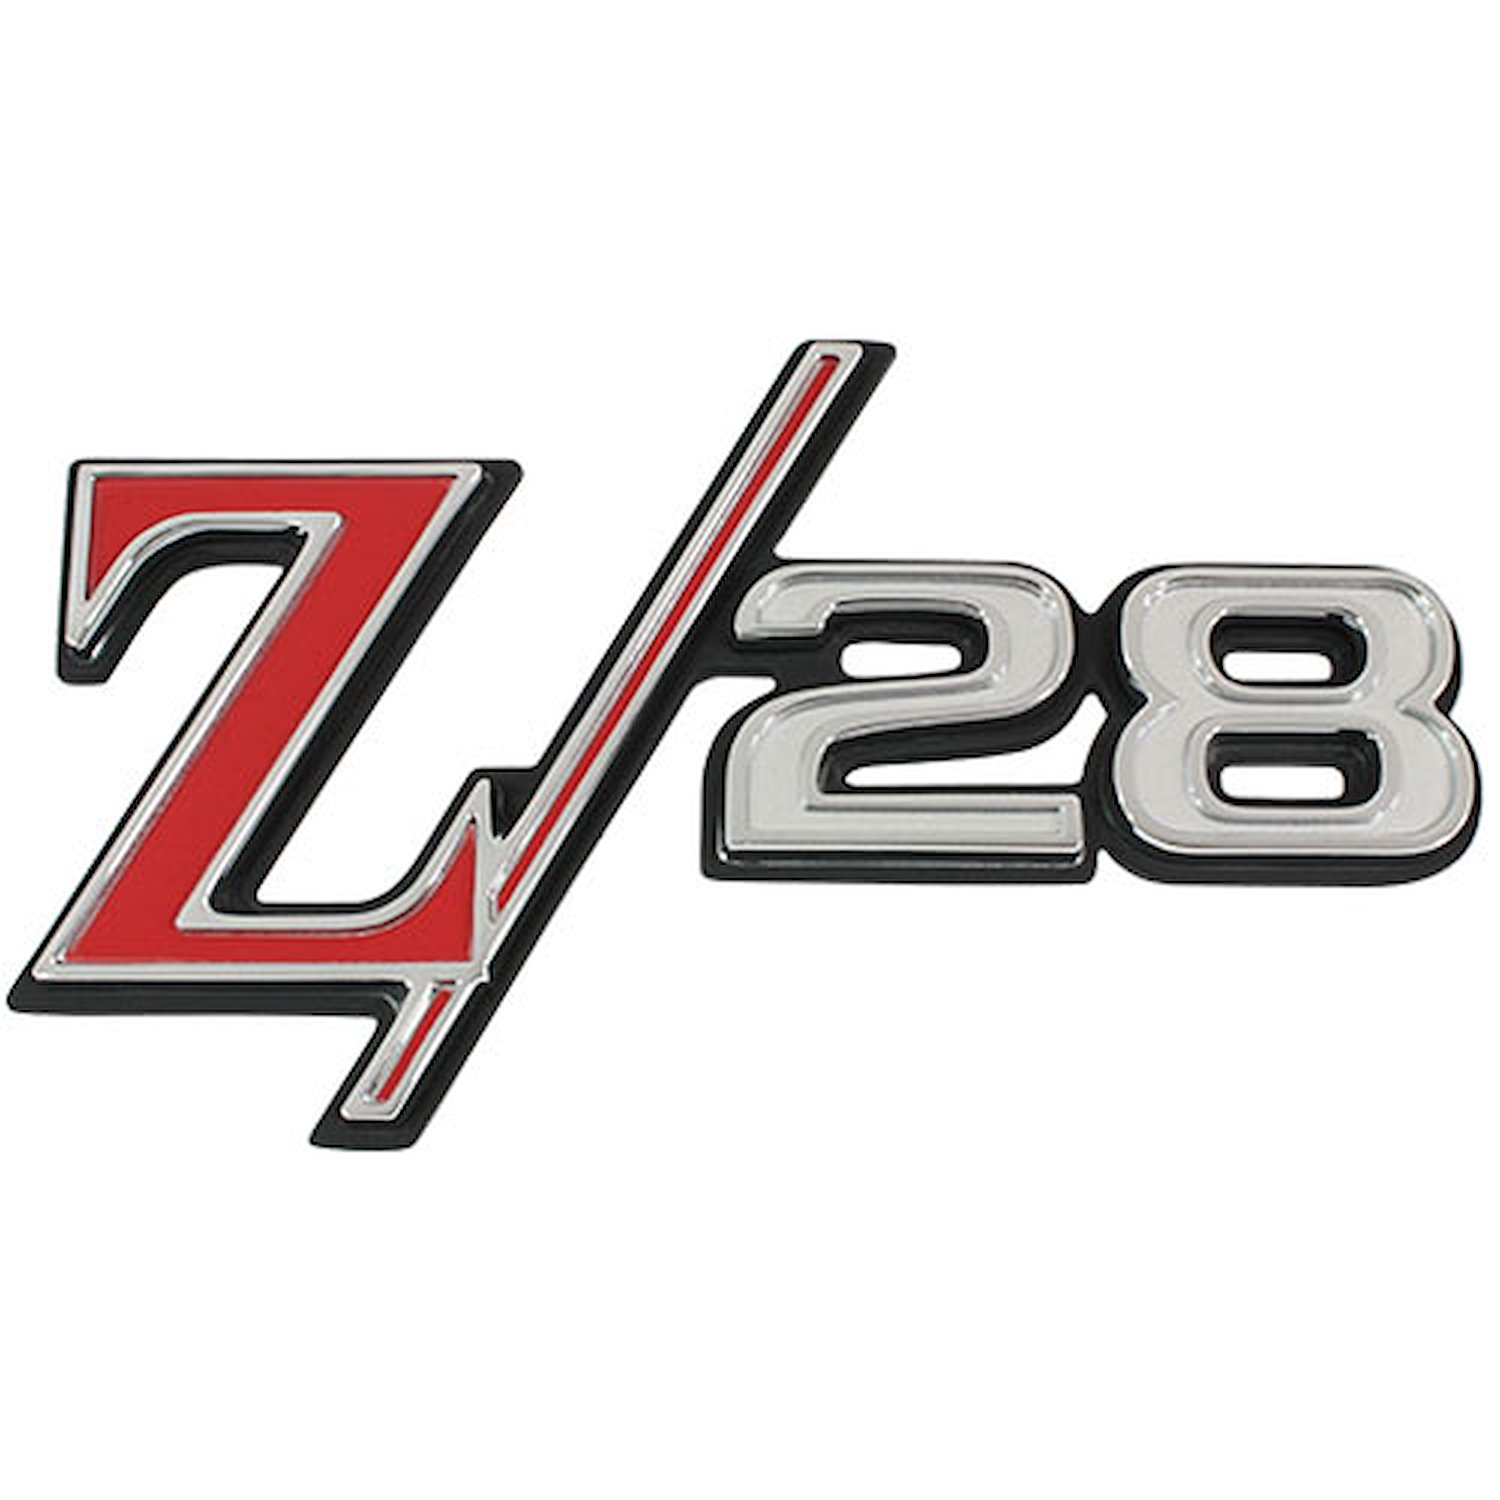 Rear Emblem 1969 Chevy Camaro Z28